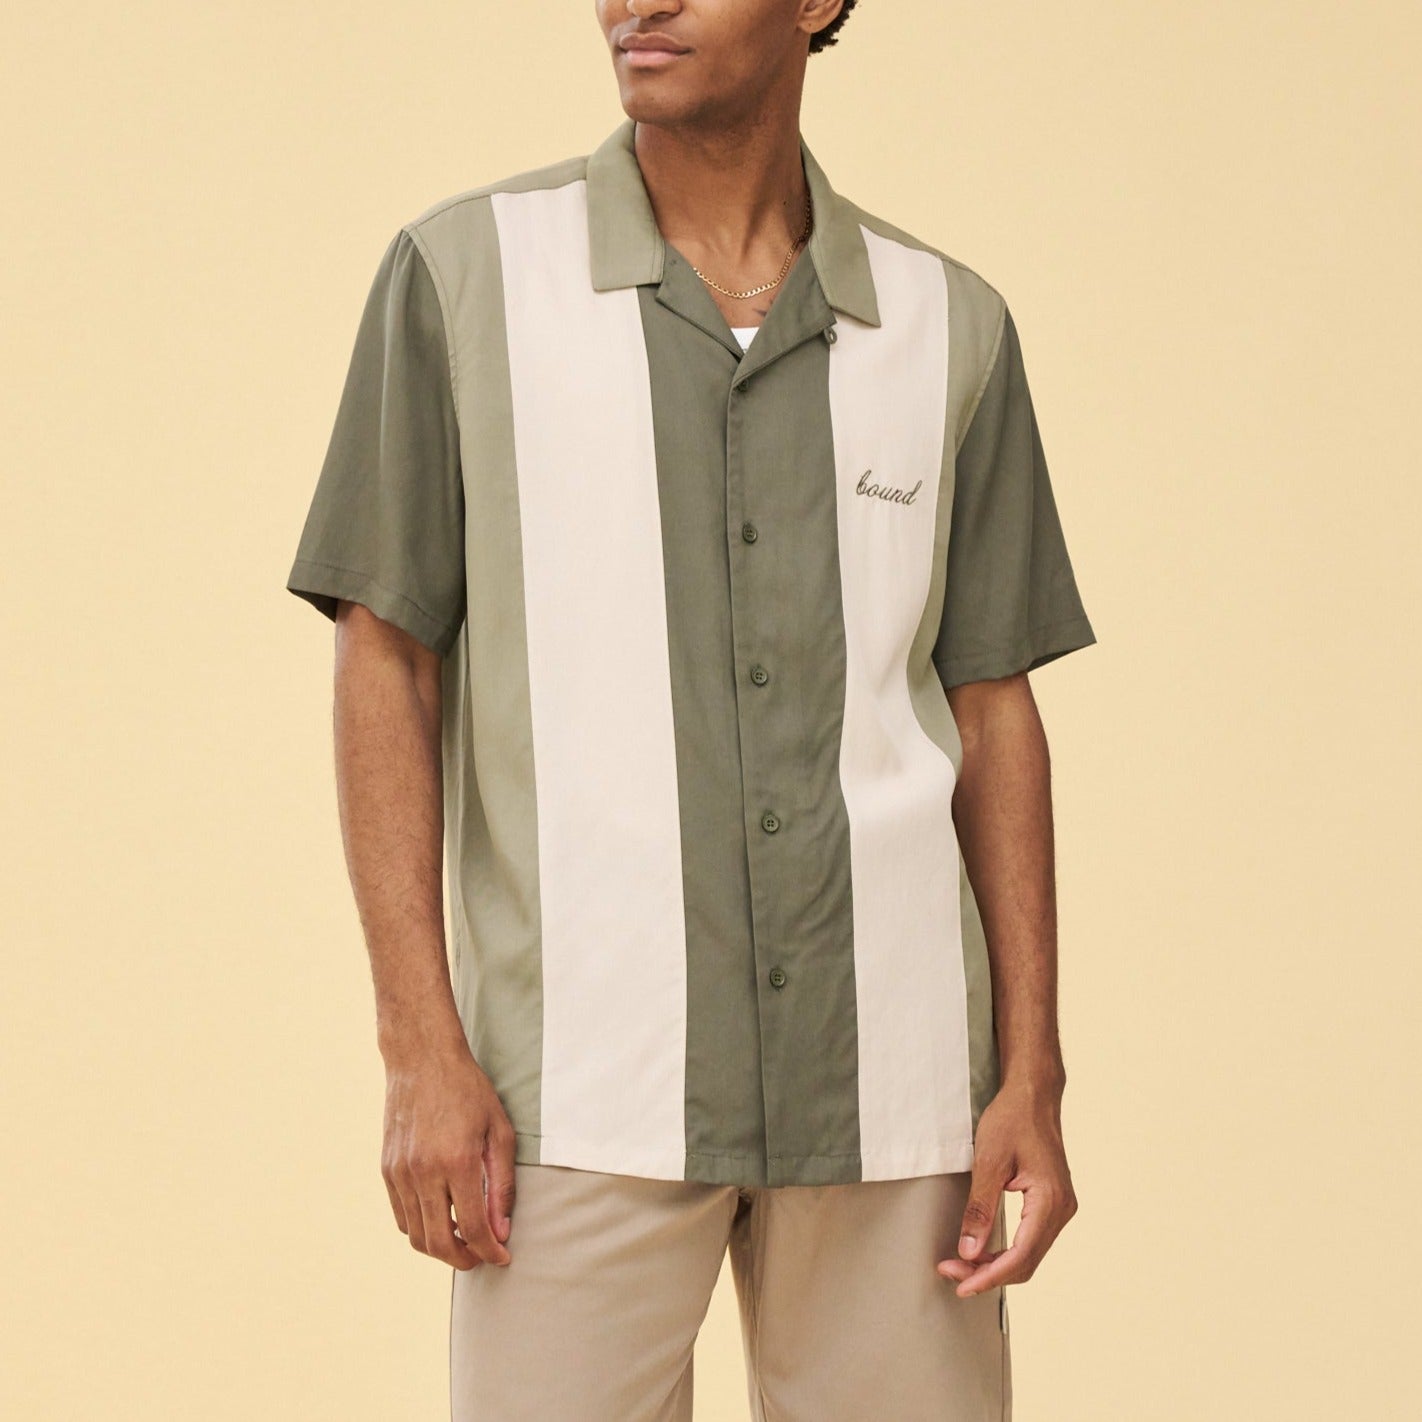 bound 'New Jersey' Bowling Shirt - Green – UN:IK Clothing